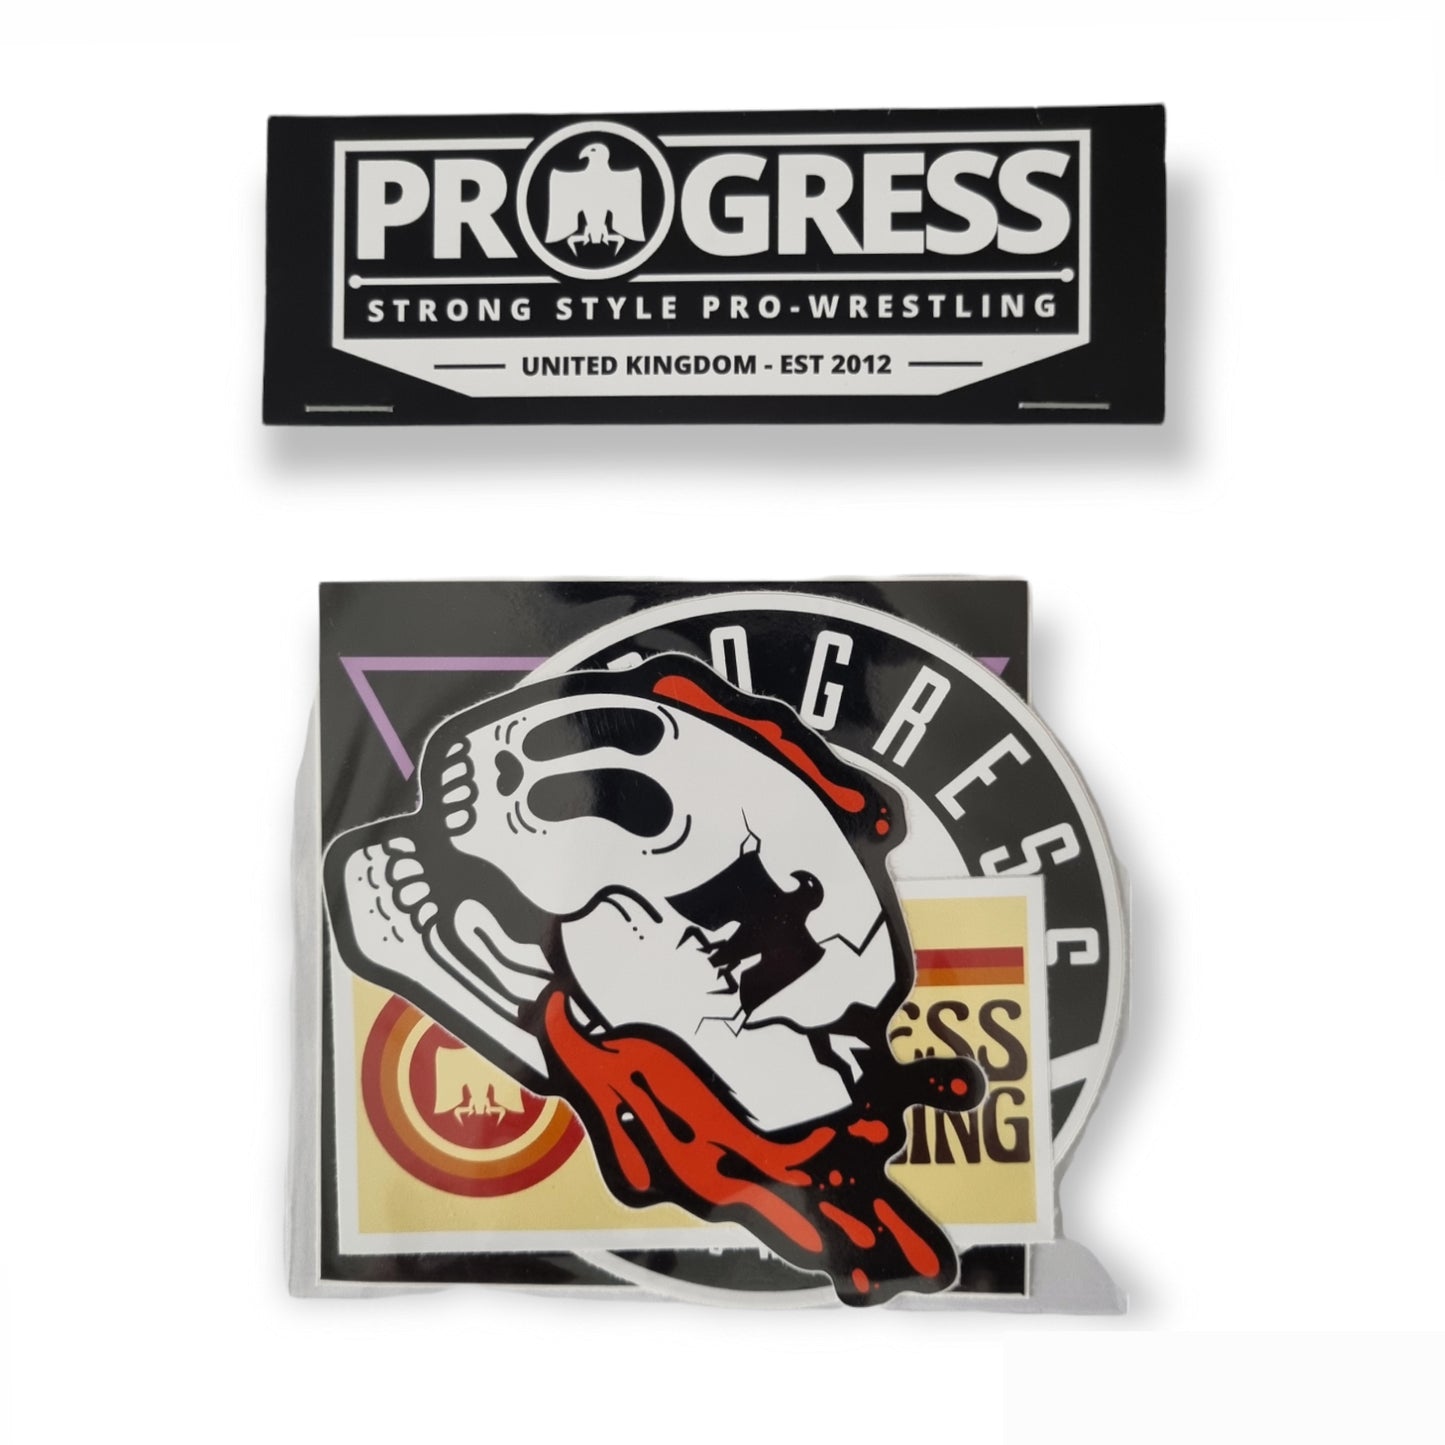 PROGRESS Wrestling Accessories - Vinyl Stickers